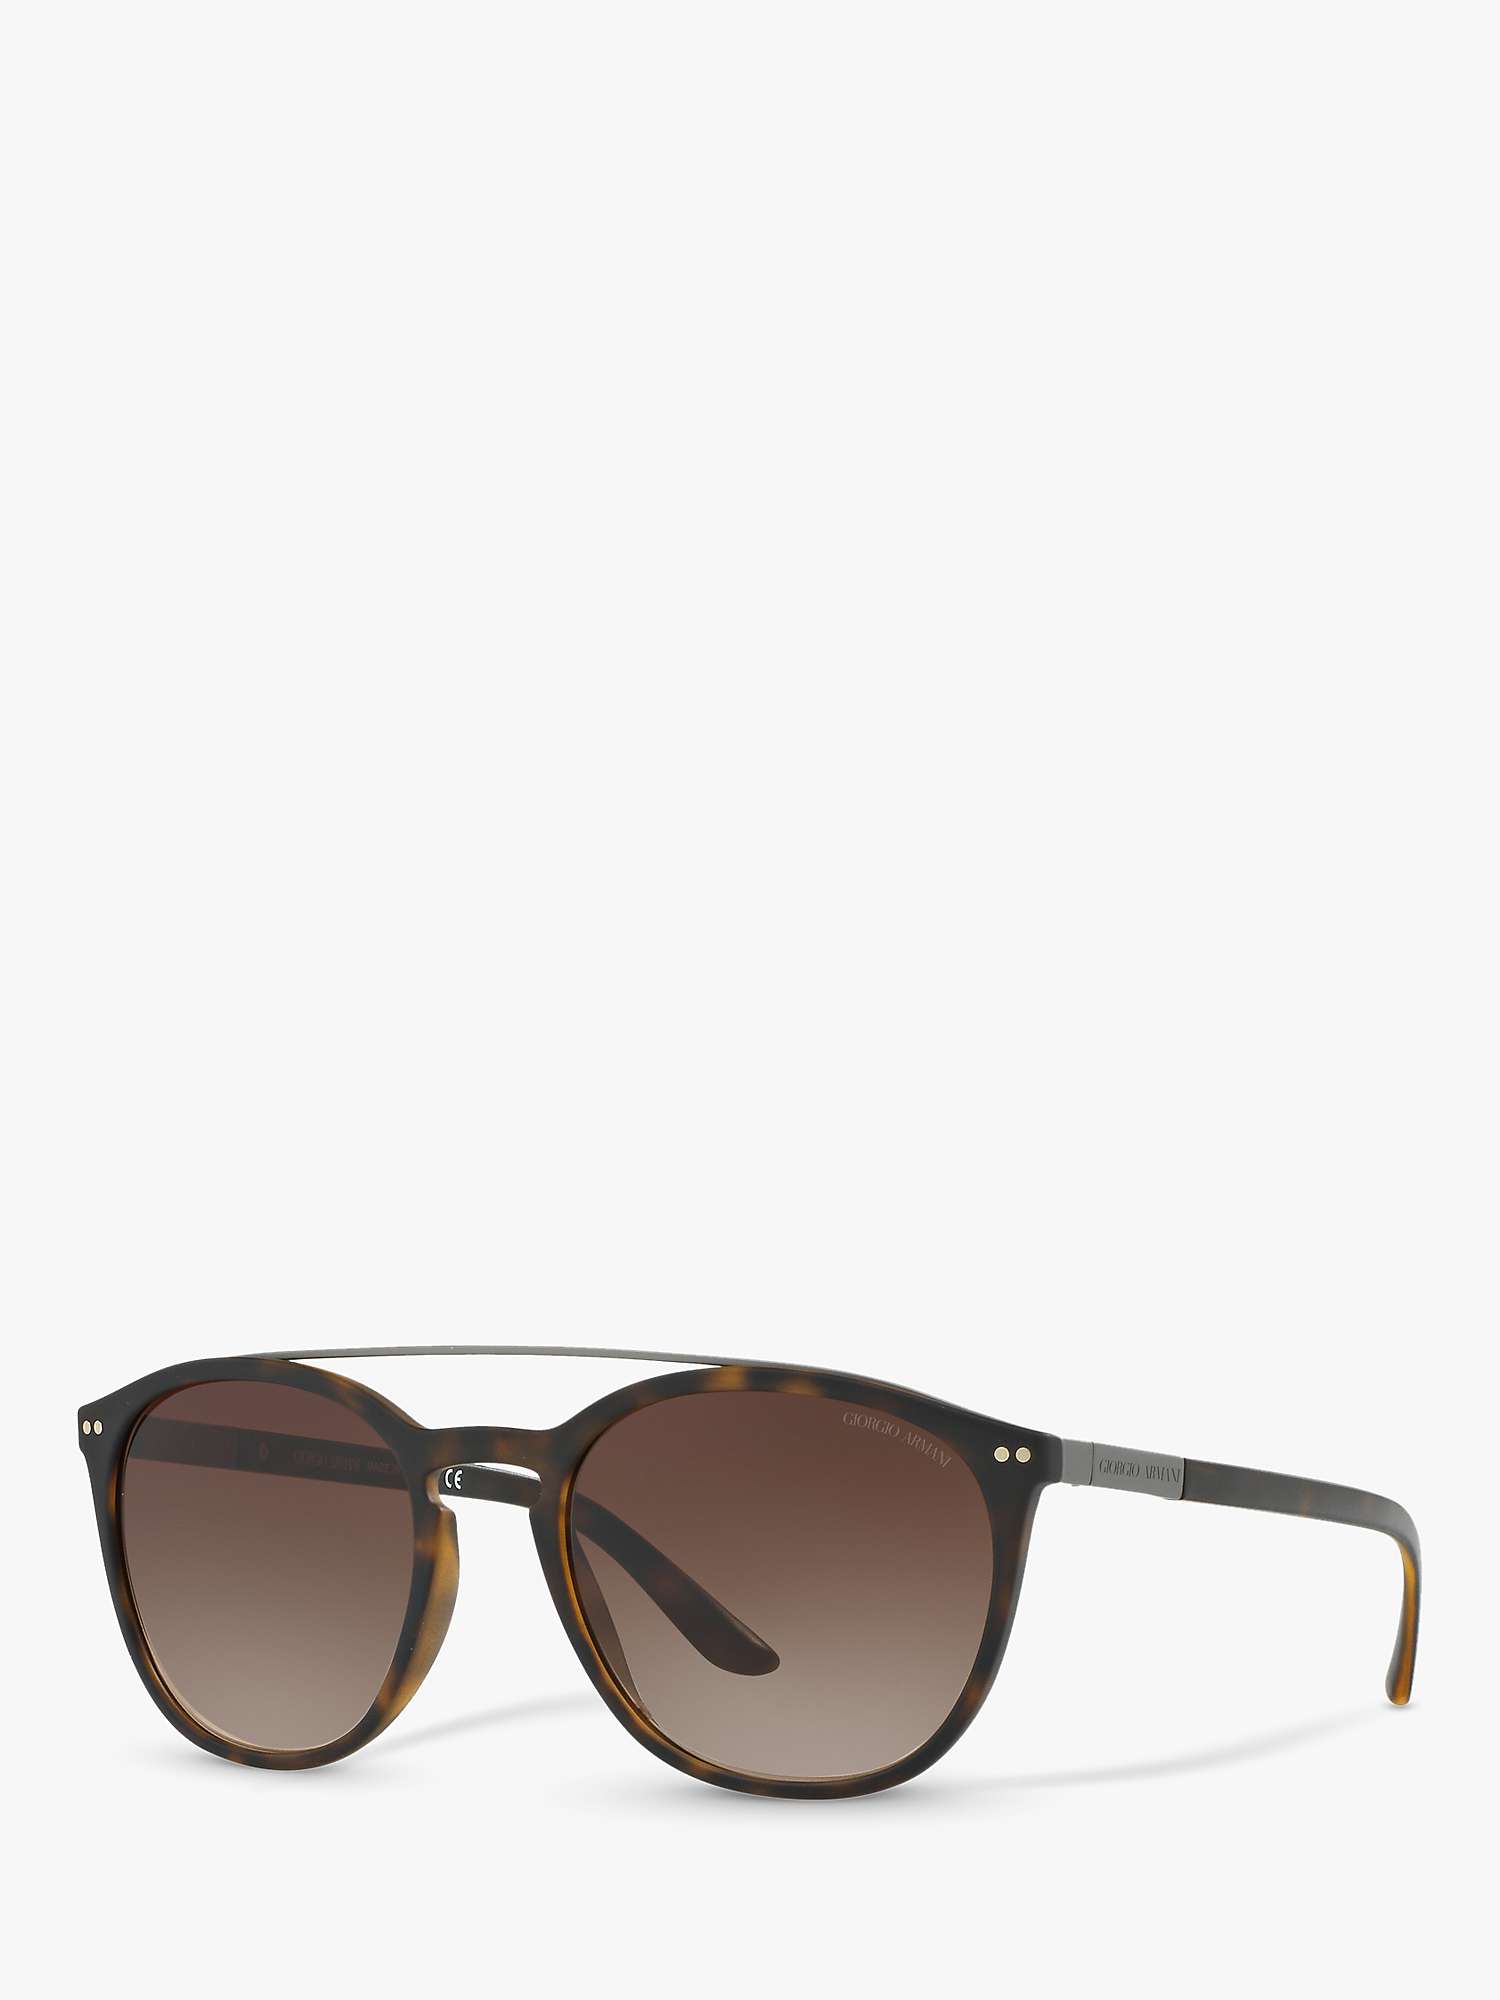 Buy Giorgio Armani AR8088 Women's Oval Sunglasses, Tortoise/Brown Gradient Online at johnlewis.com